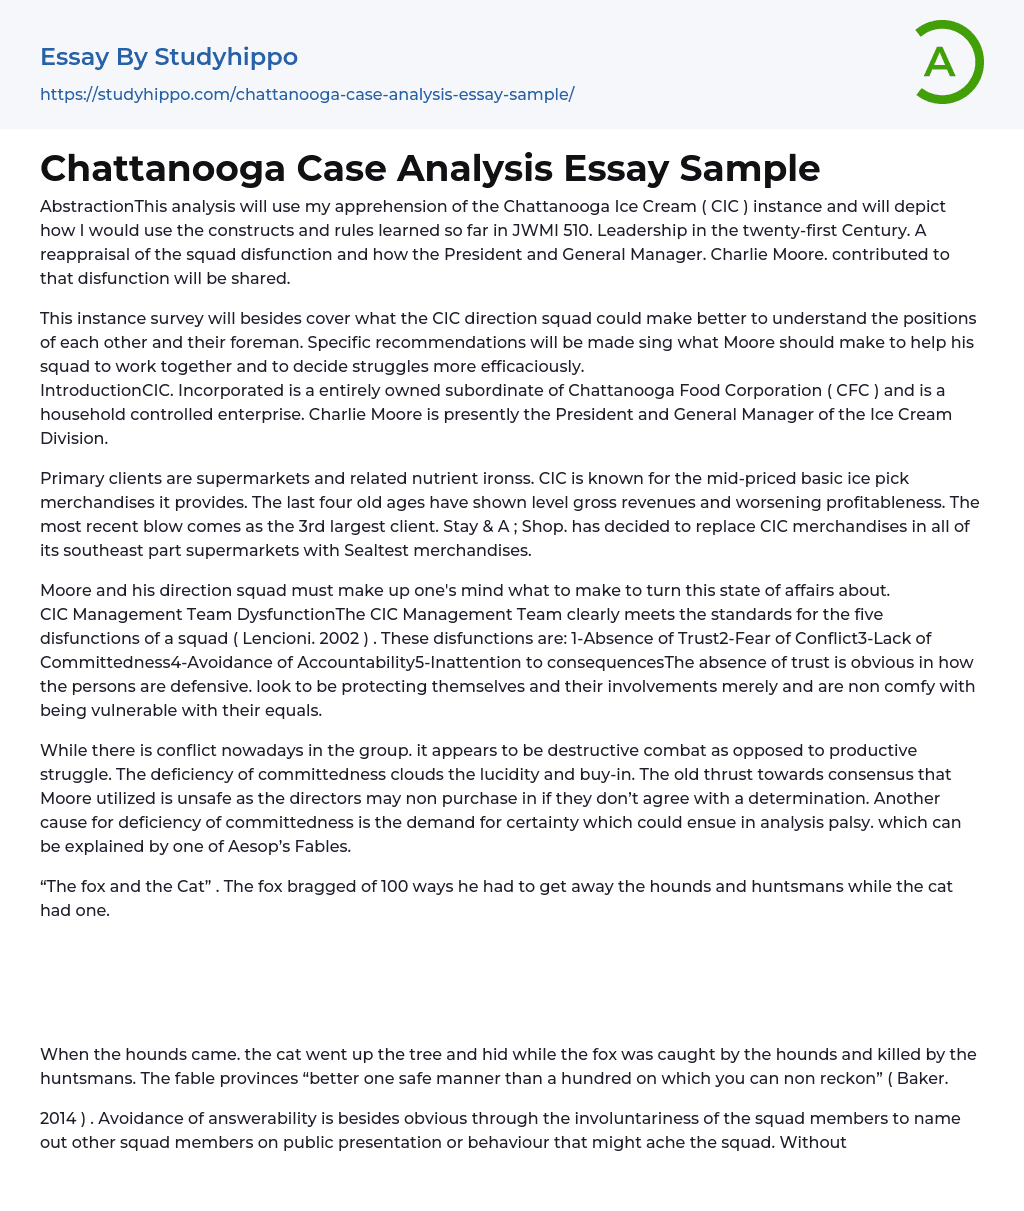 Chattanooga Case Analysis Essay Sample